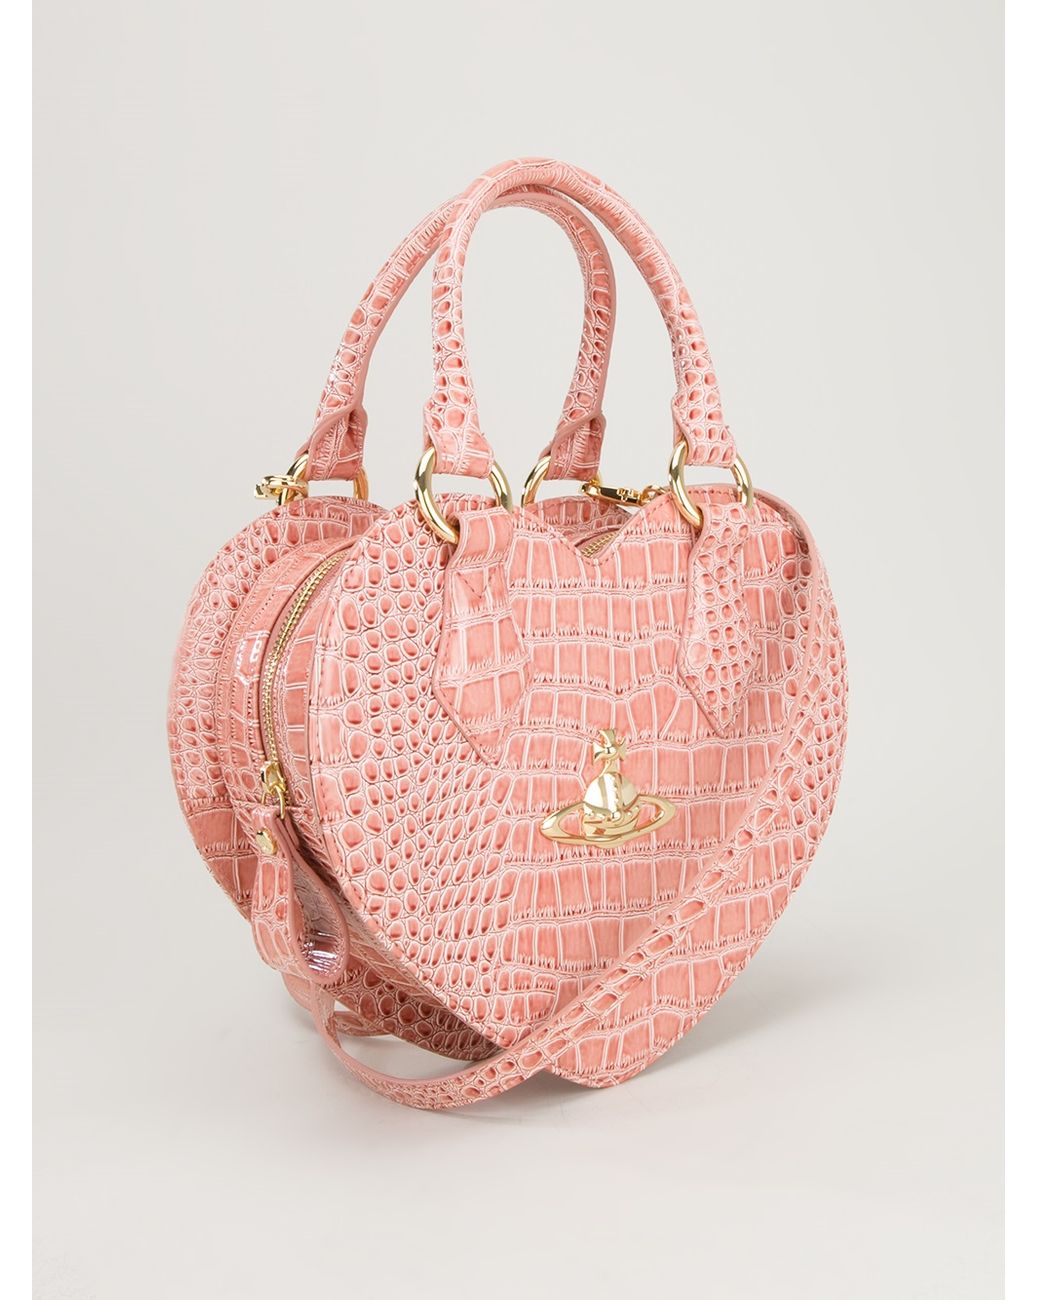 vivienne westwood pink heart bag Off 50% - www.maryzhang.com